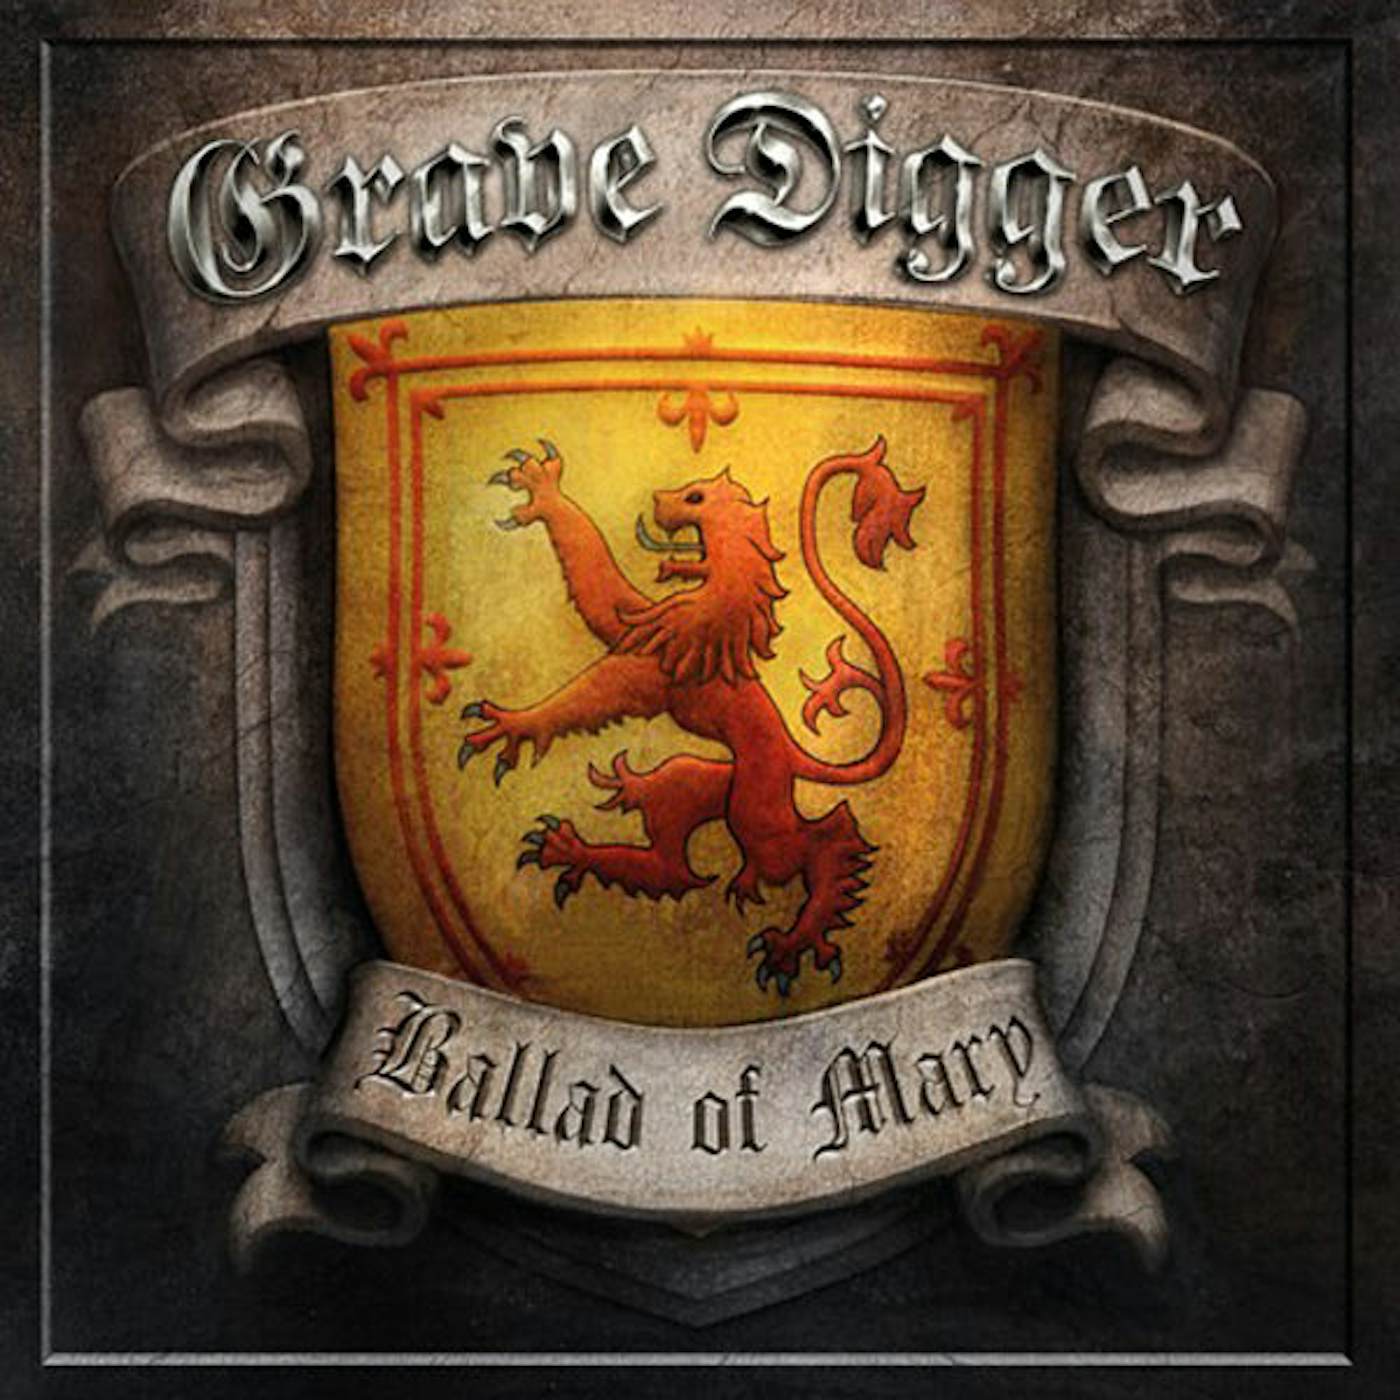  Grave Digger LP - Ballad Of Mary (Vinyl)